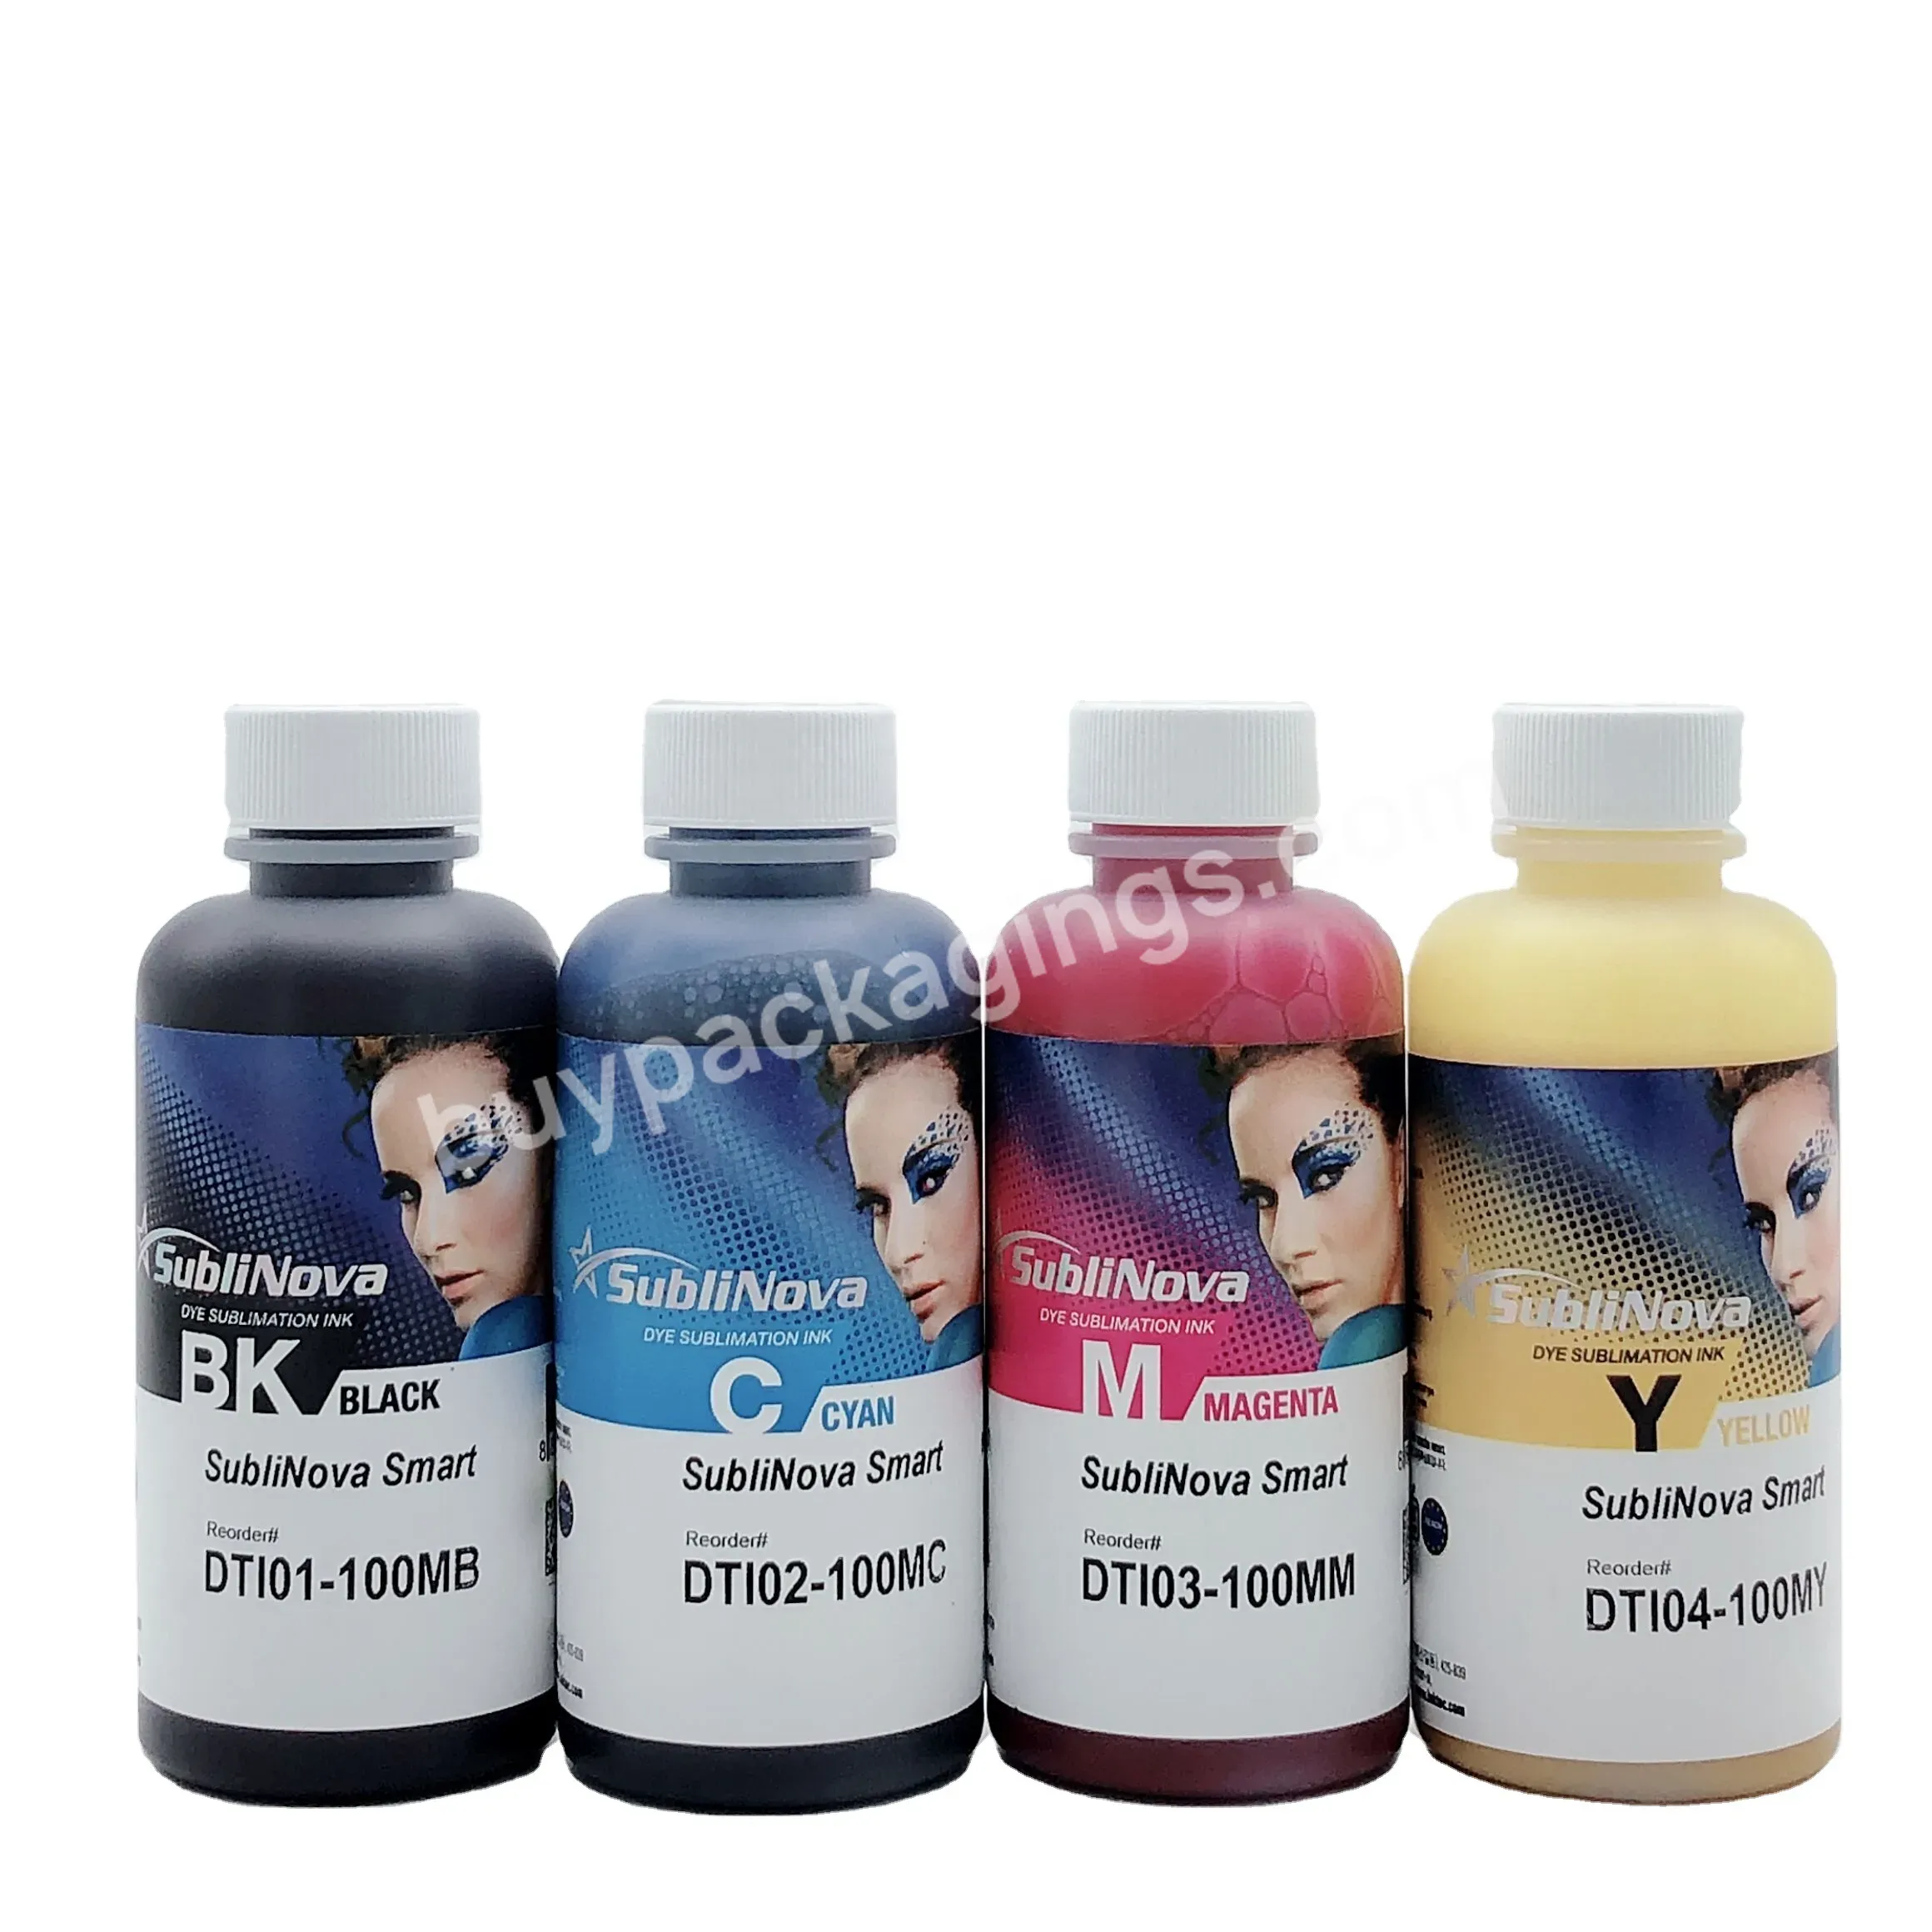 100ml/bottle Sublinova Smart Sublimation Ink For Ep Inkjet Printer - Buy Sublimation Ink,Sublimation Dye Ink,Sublimation Ink For Ep.